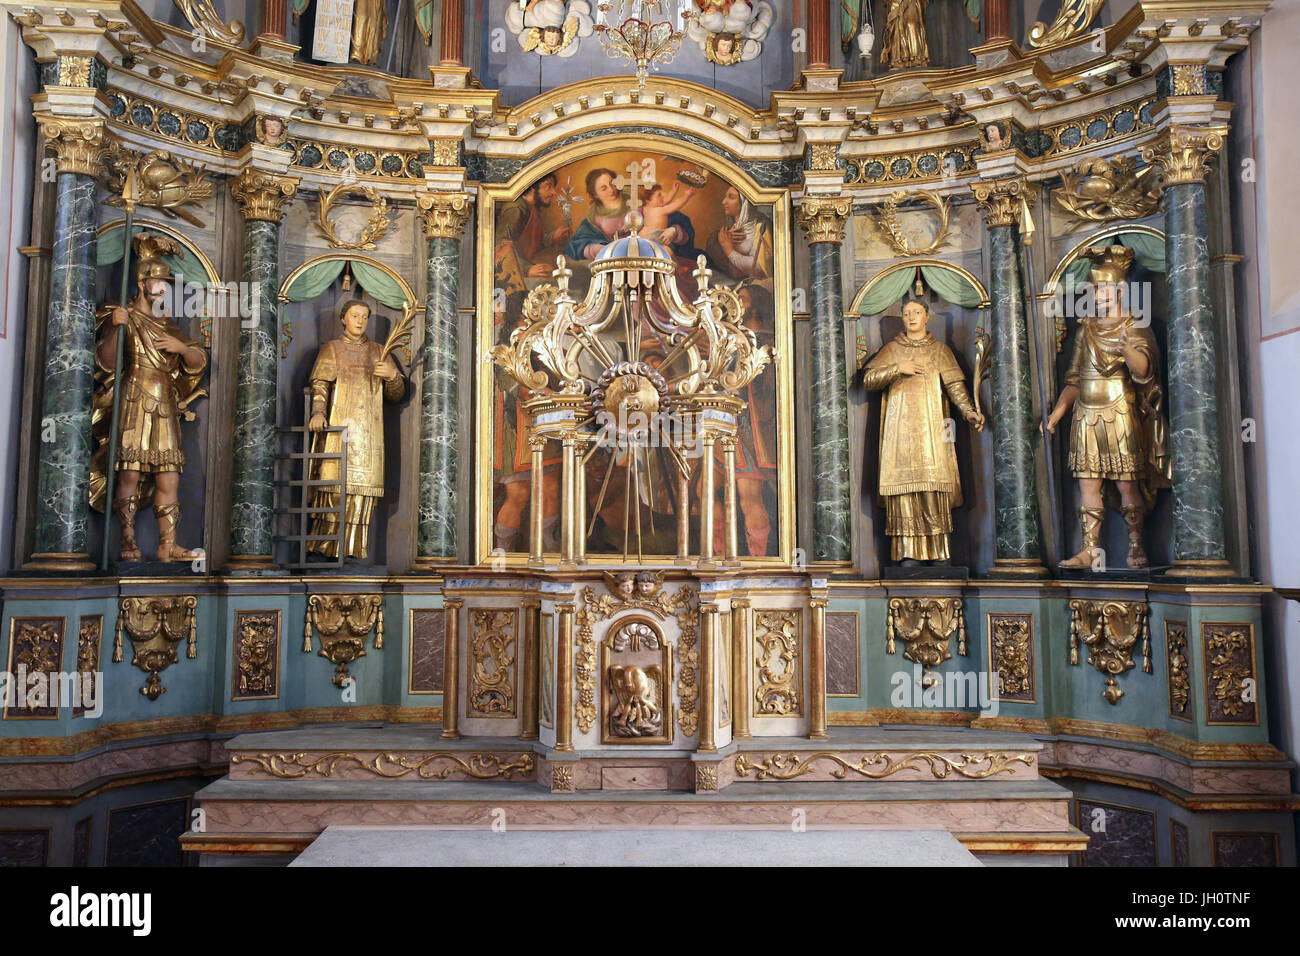 Restoration of Saint Gervais baroque church. The altarpiece.  France. Stock Photo